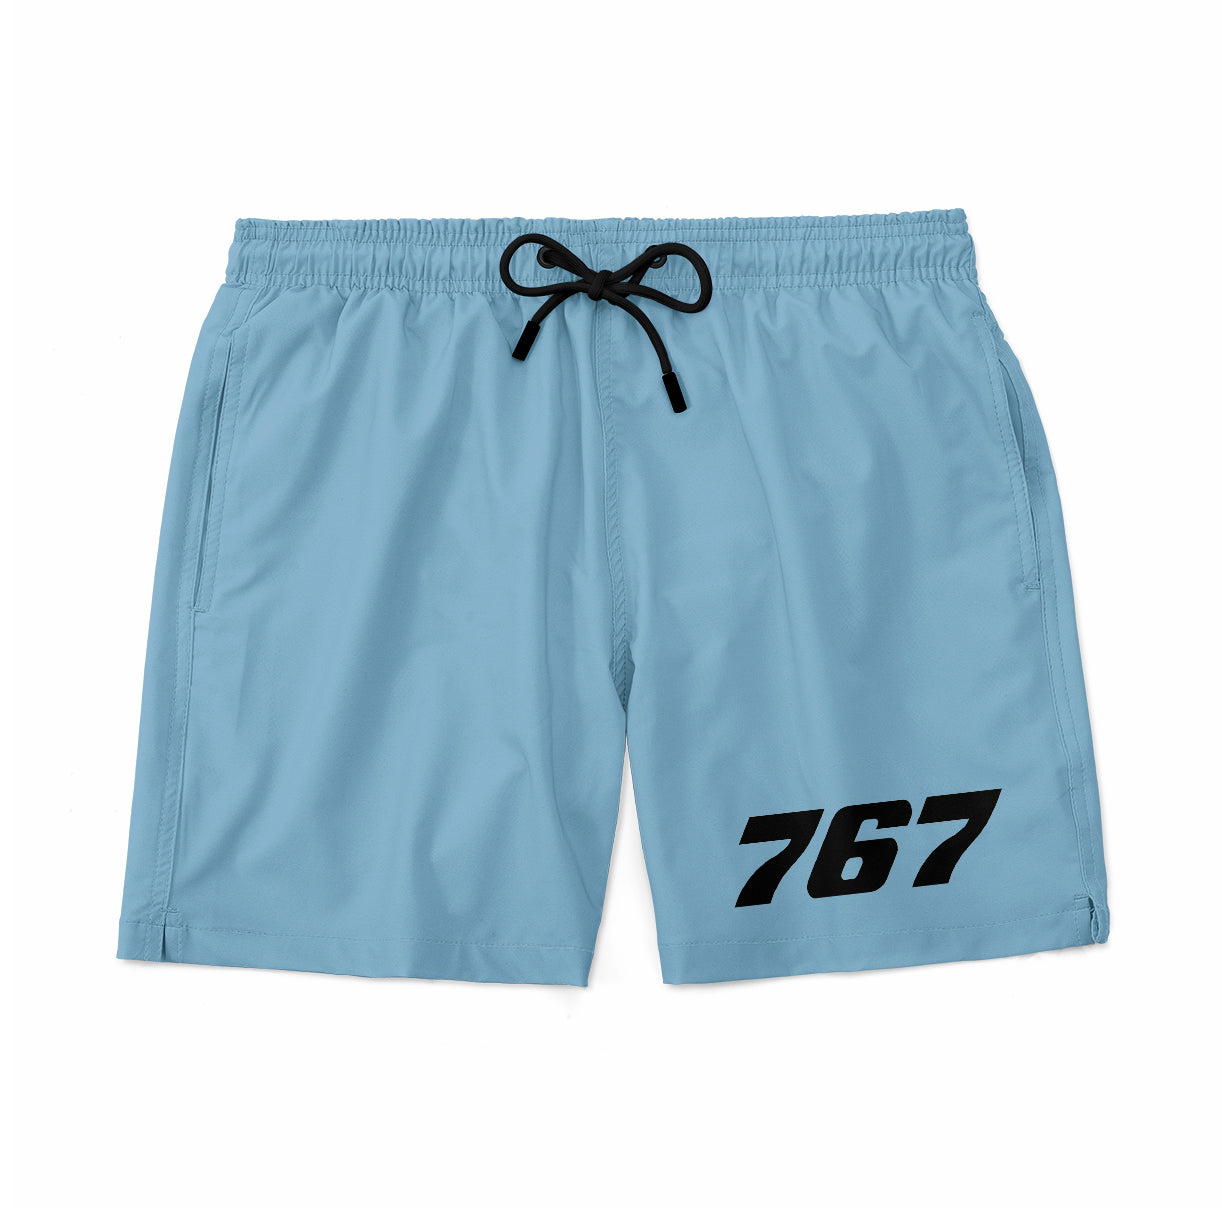 767 Flat Text Designed Swim Trunks & Shorts